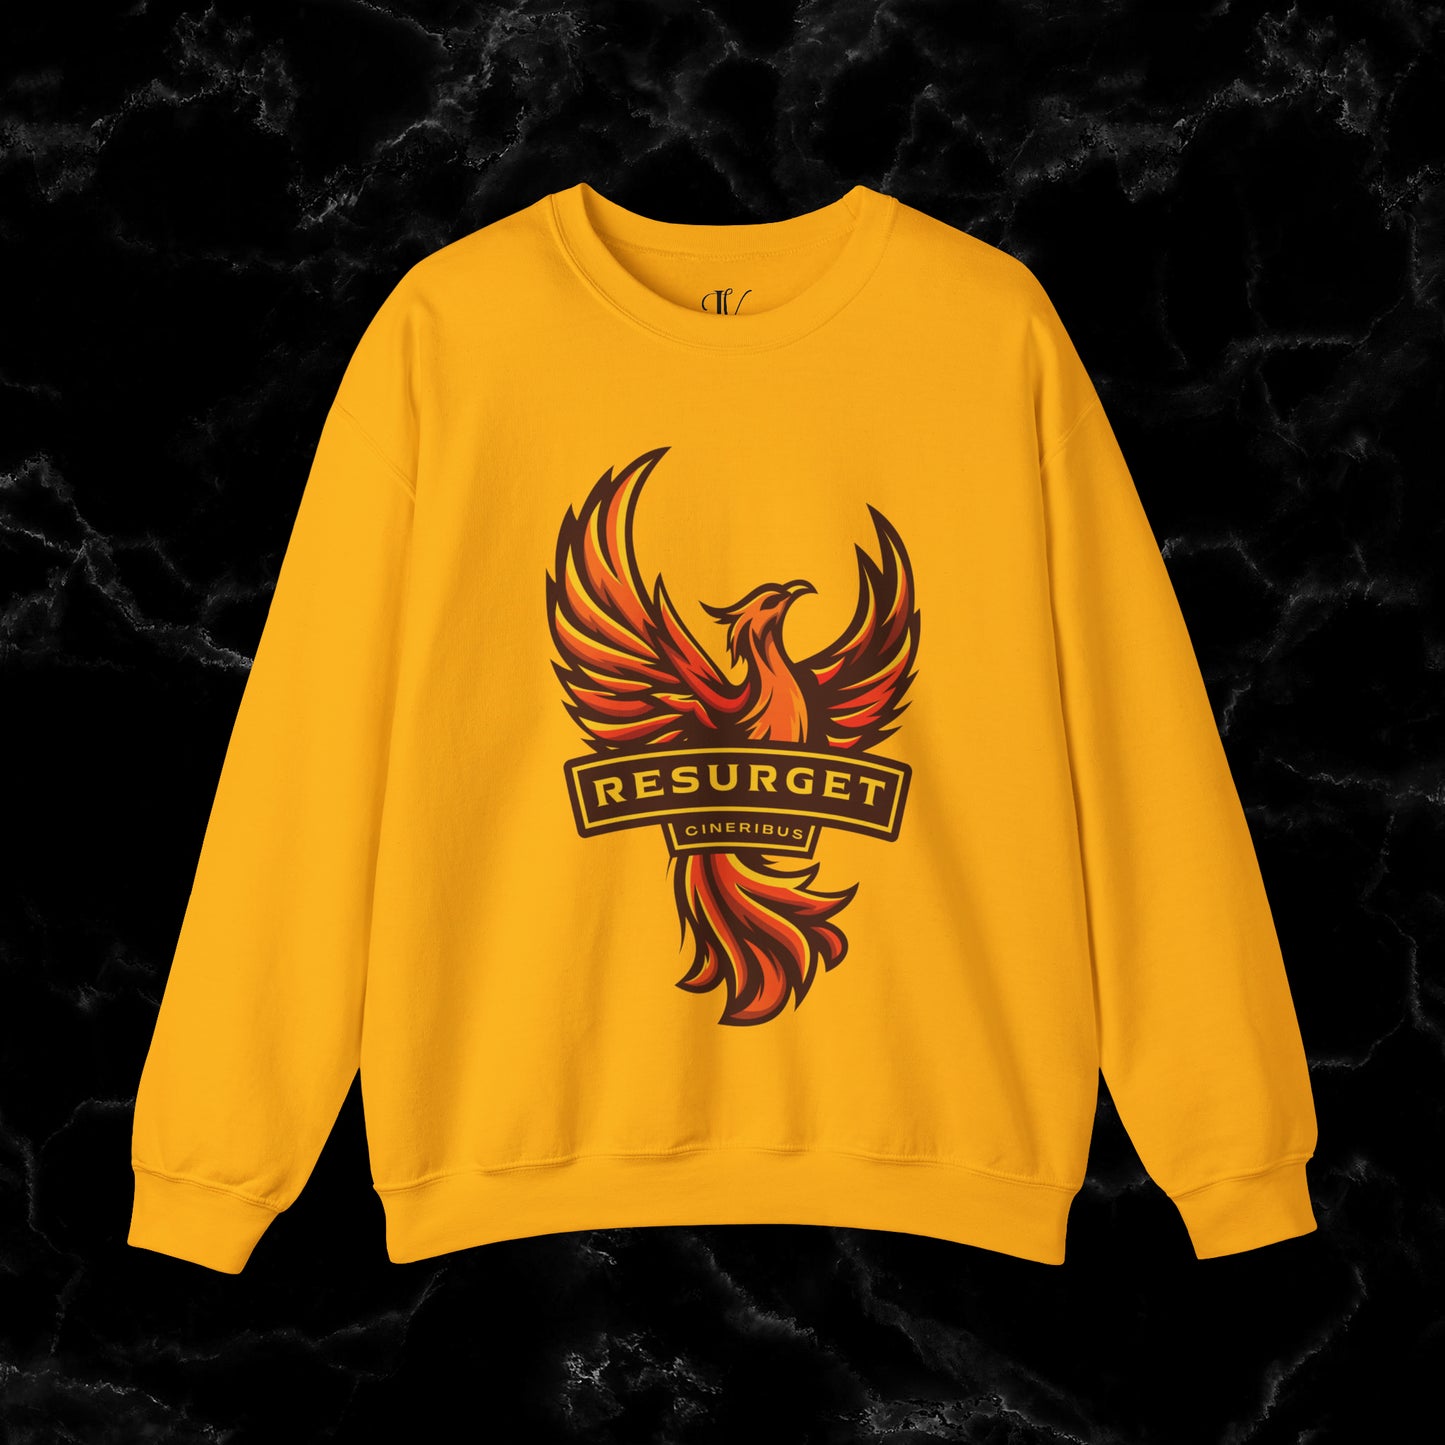 Resurget Cineribus Unisex Crewneck Sweatshirt - Latin Inspirational Gifts for Sports Football Fans Sweatshirt S Gold 